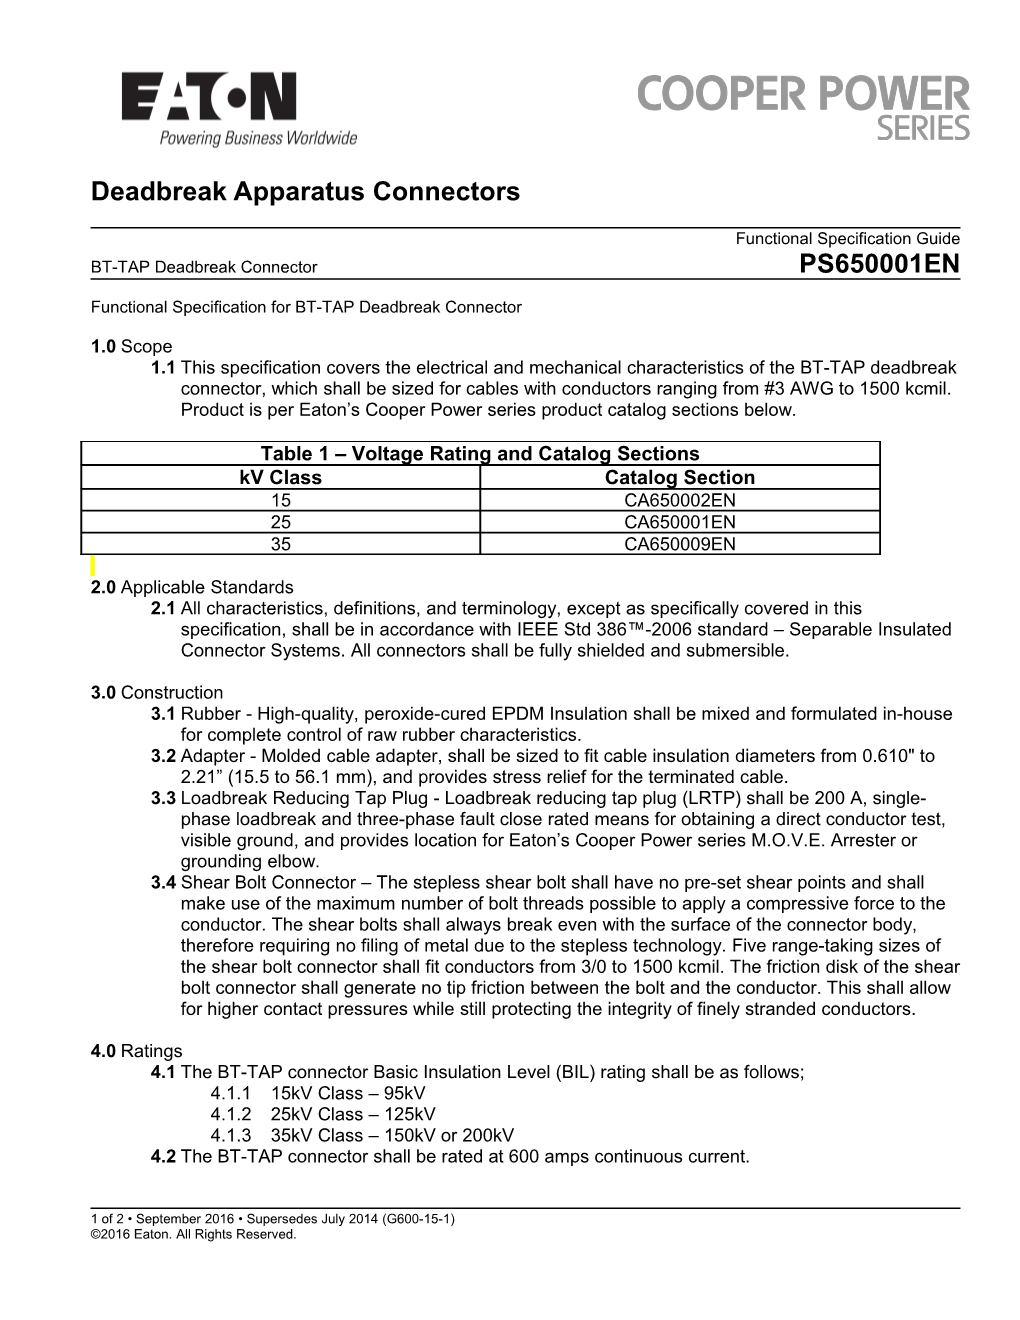 Functional Specification for BT-TAP Deadbreak Connector